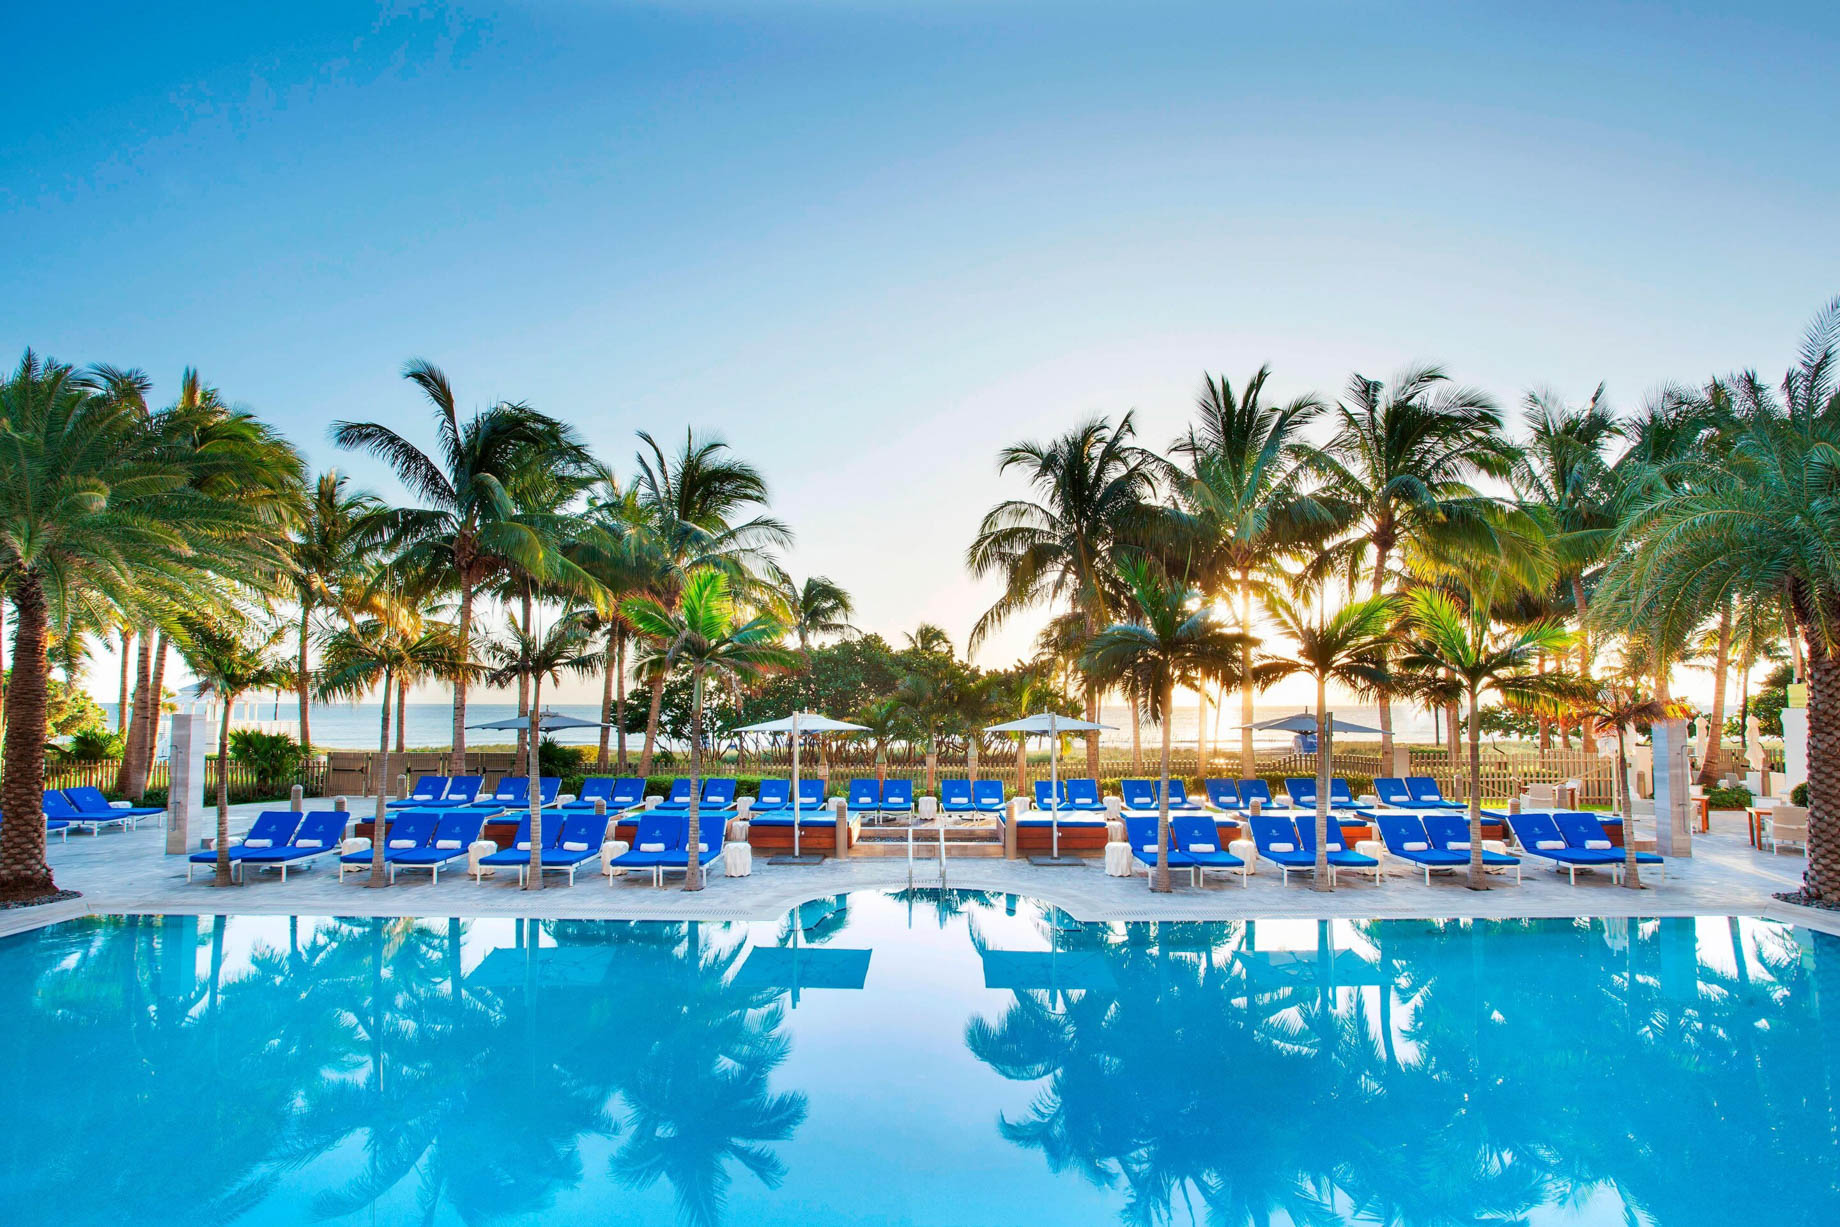 The St. Regis Bal Harbour Resort - Miami Beach, FL, USA - Resort Pool Deck